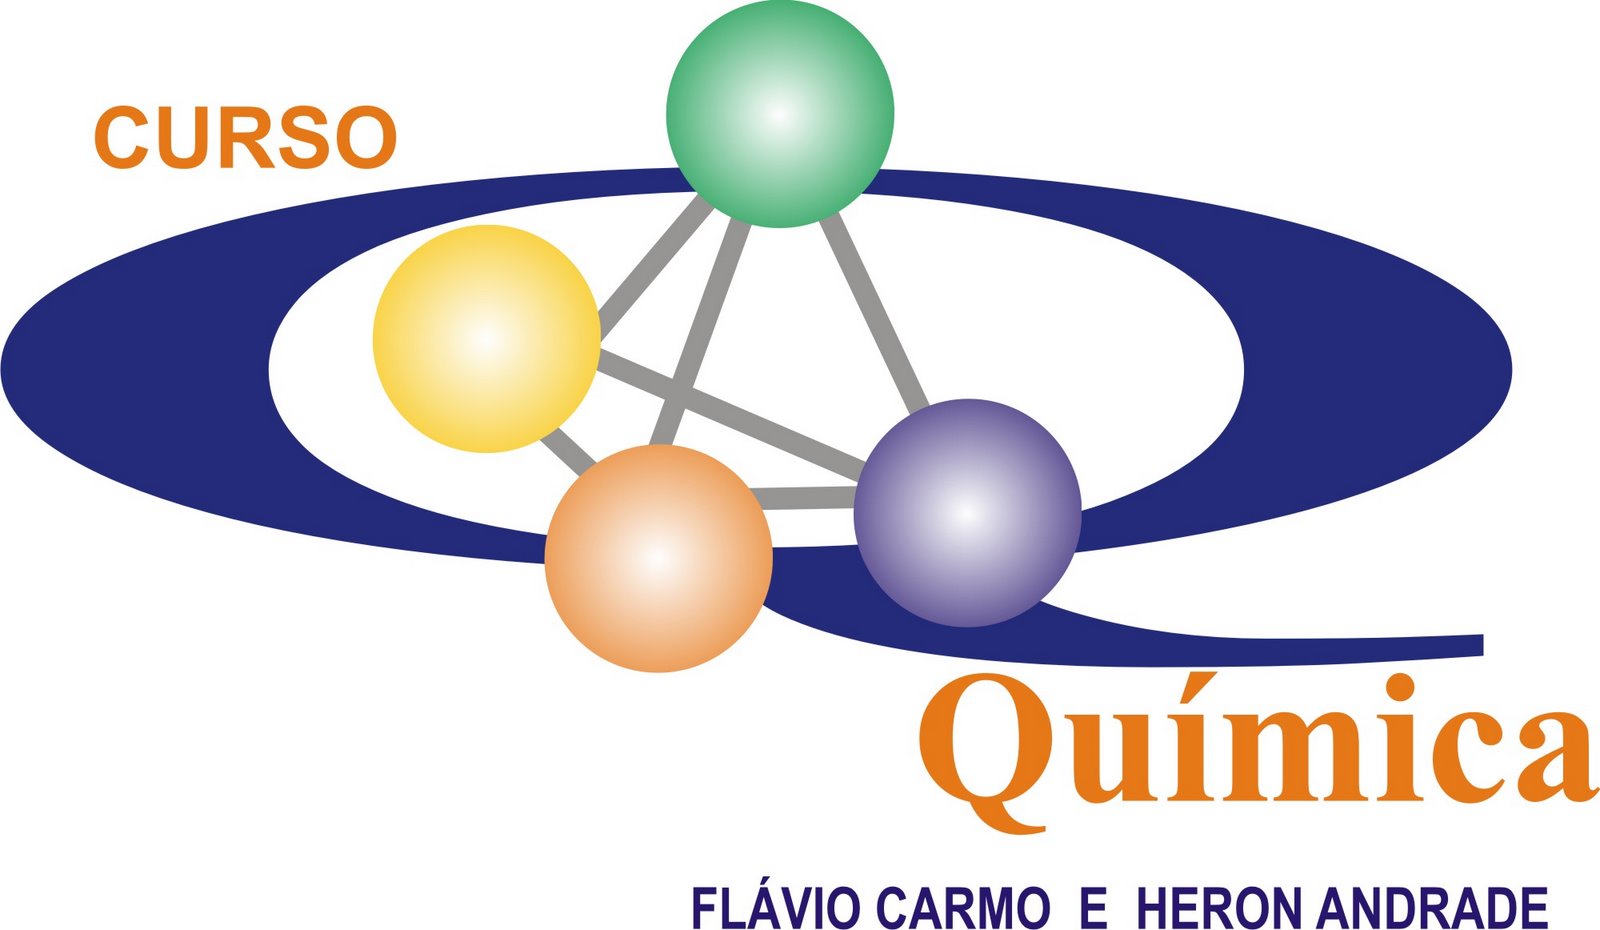 CURSO DE QUÍMICA - Flávio Carmo & Heron Andrade